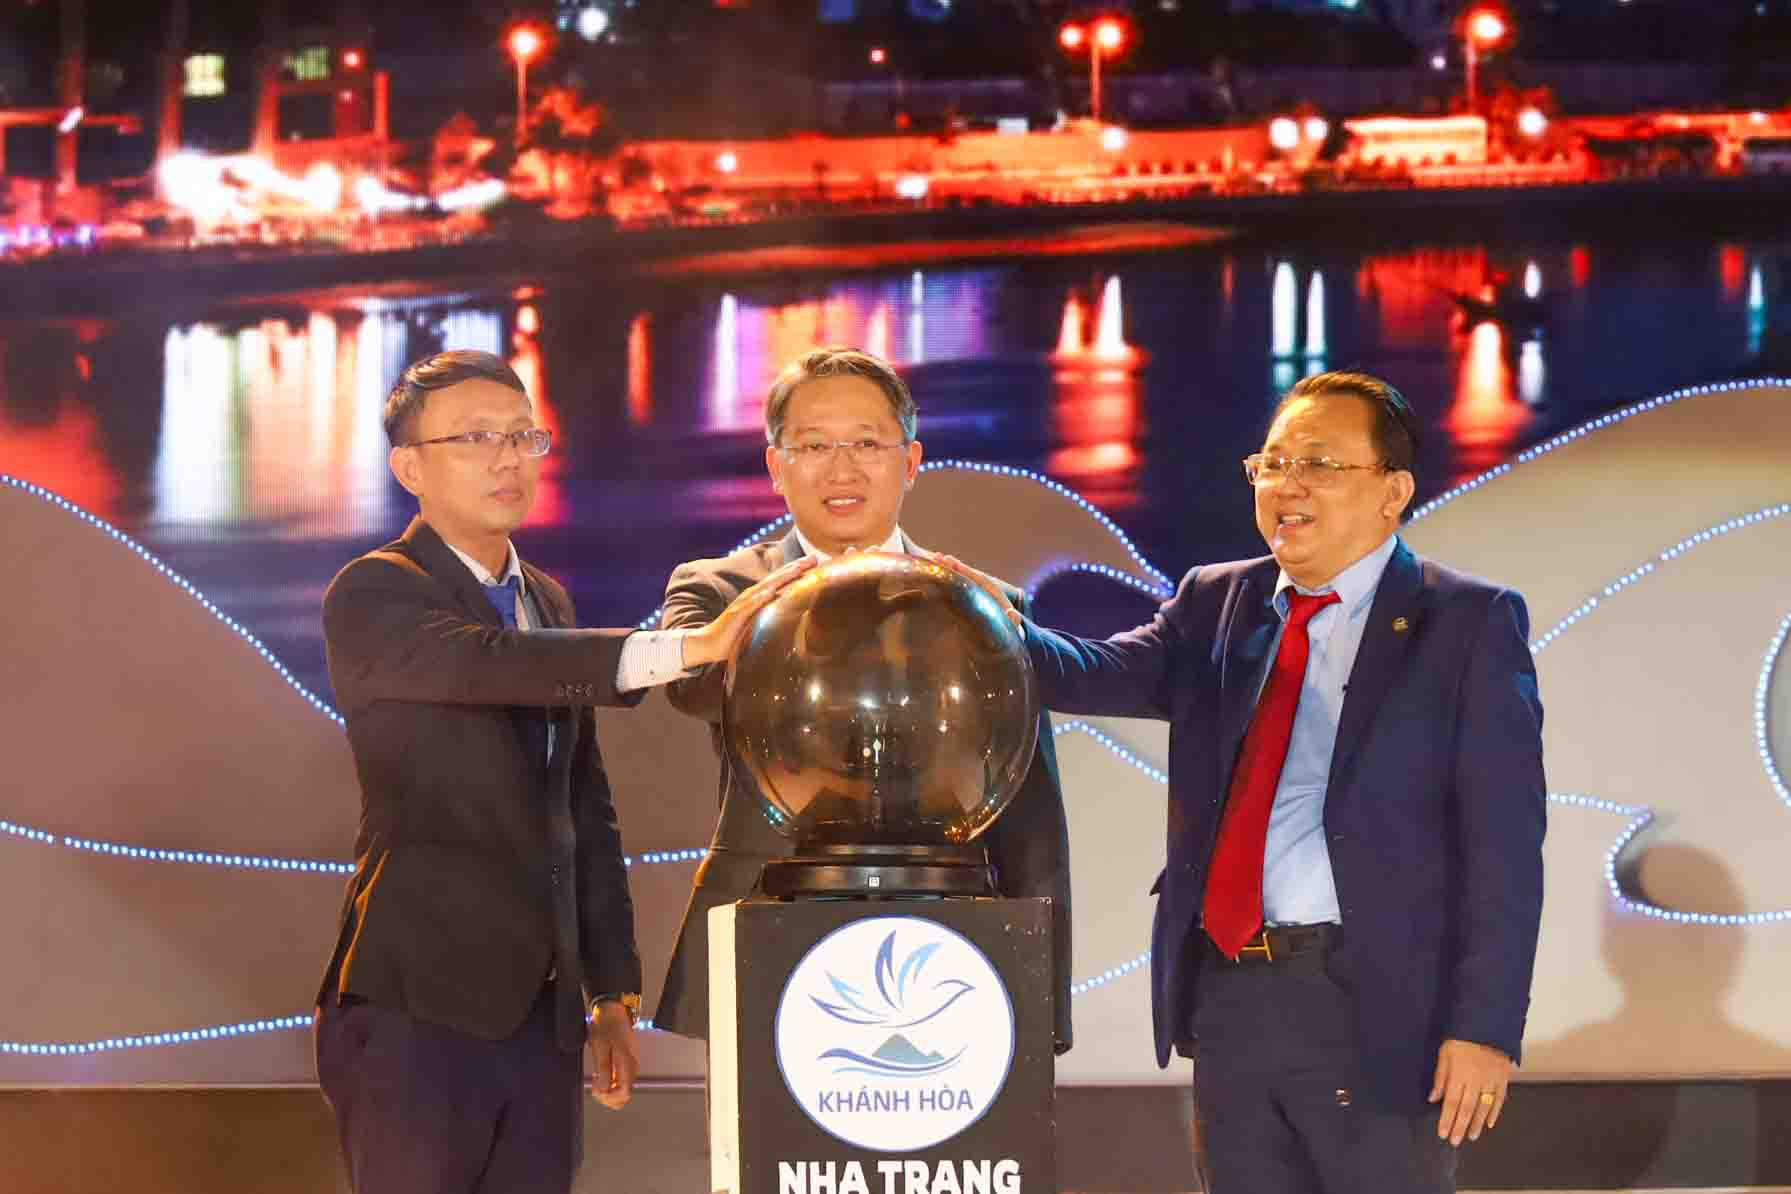 Khanh Hoa’s leadership activate crystal ball to open “Nha Trang – Hello Summer 2022” program